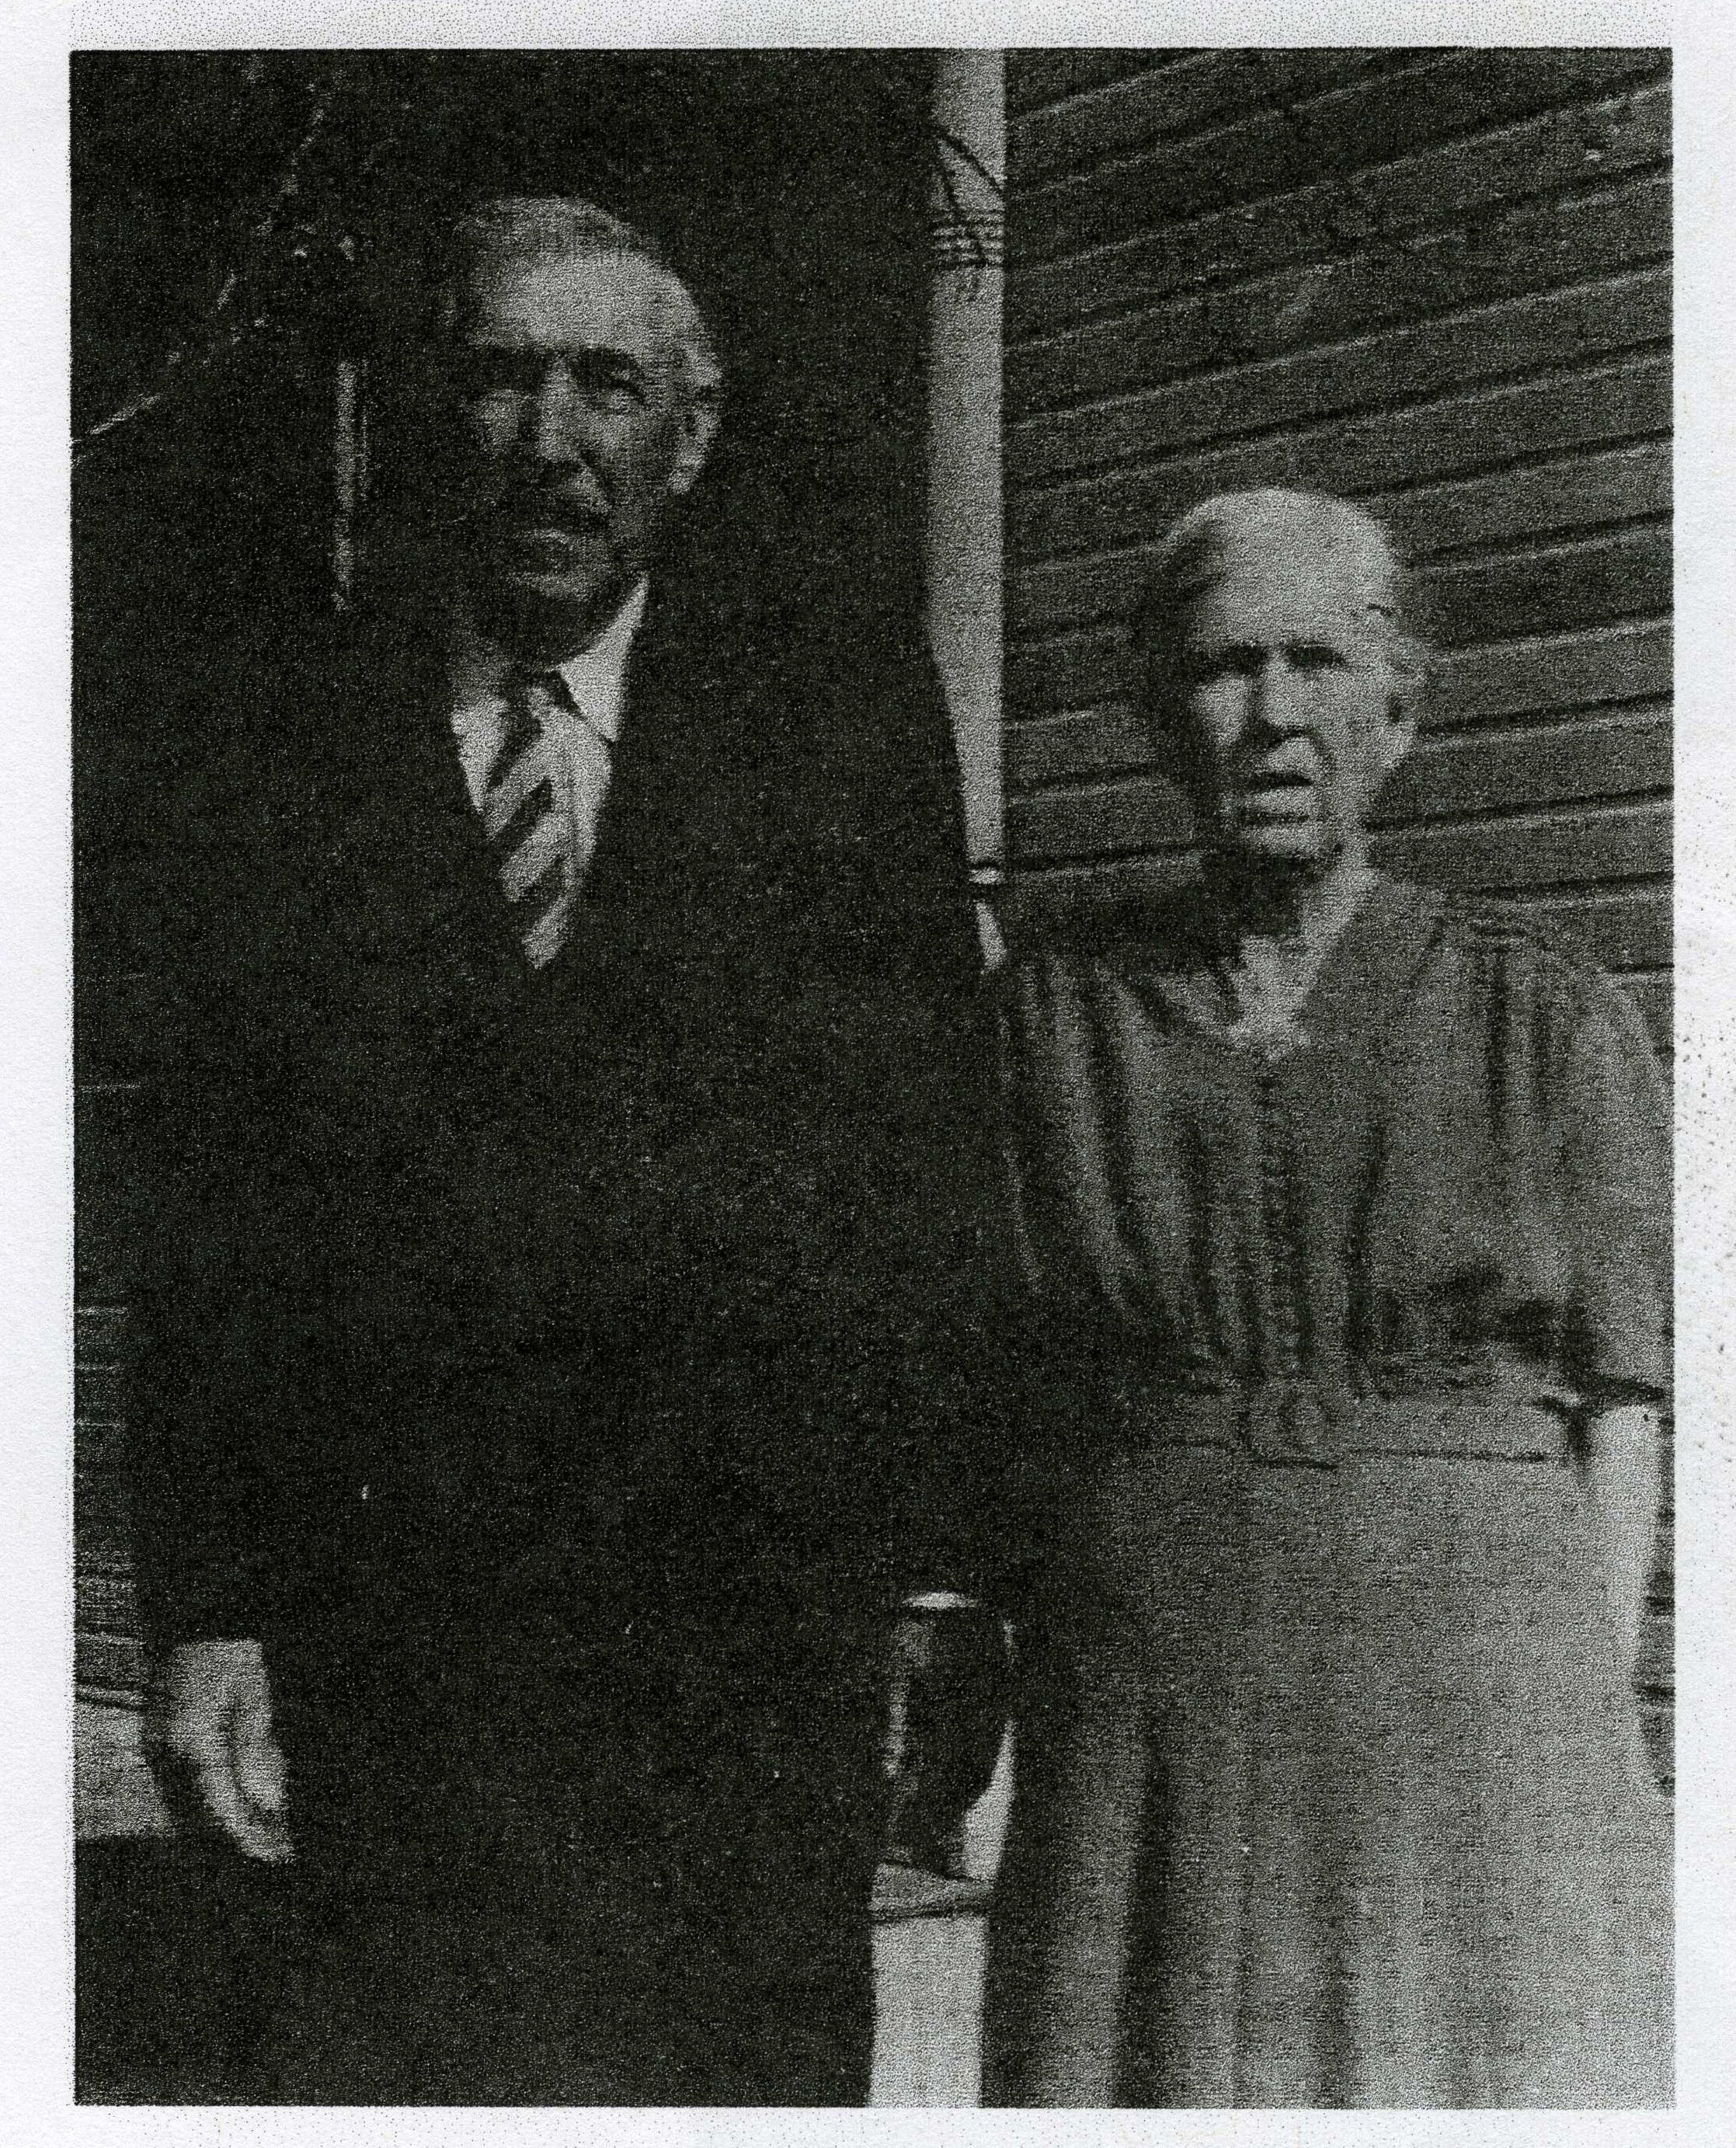 Sarah James and William Thomas Gilgo